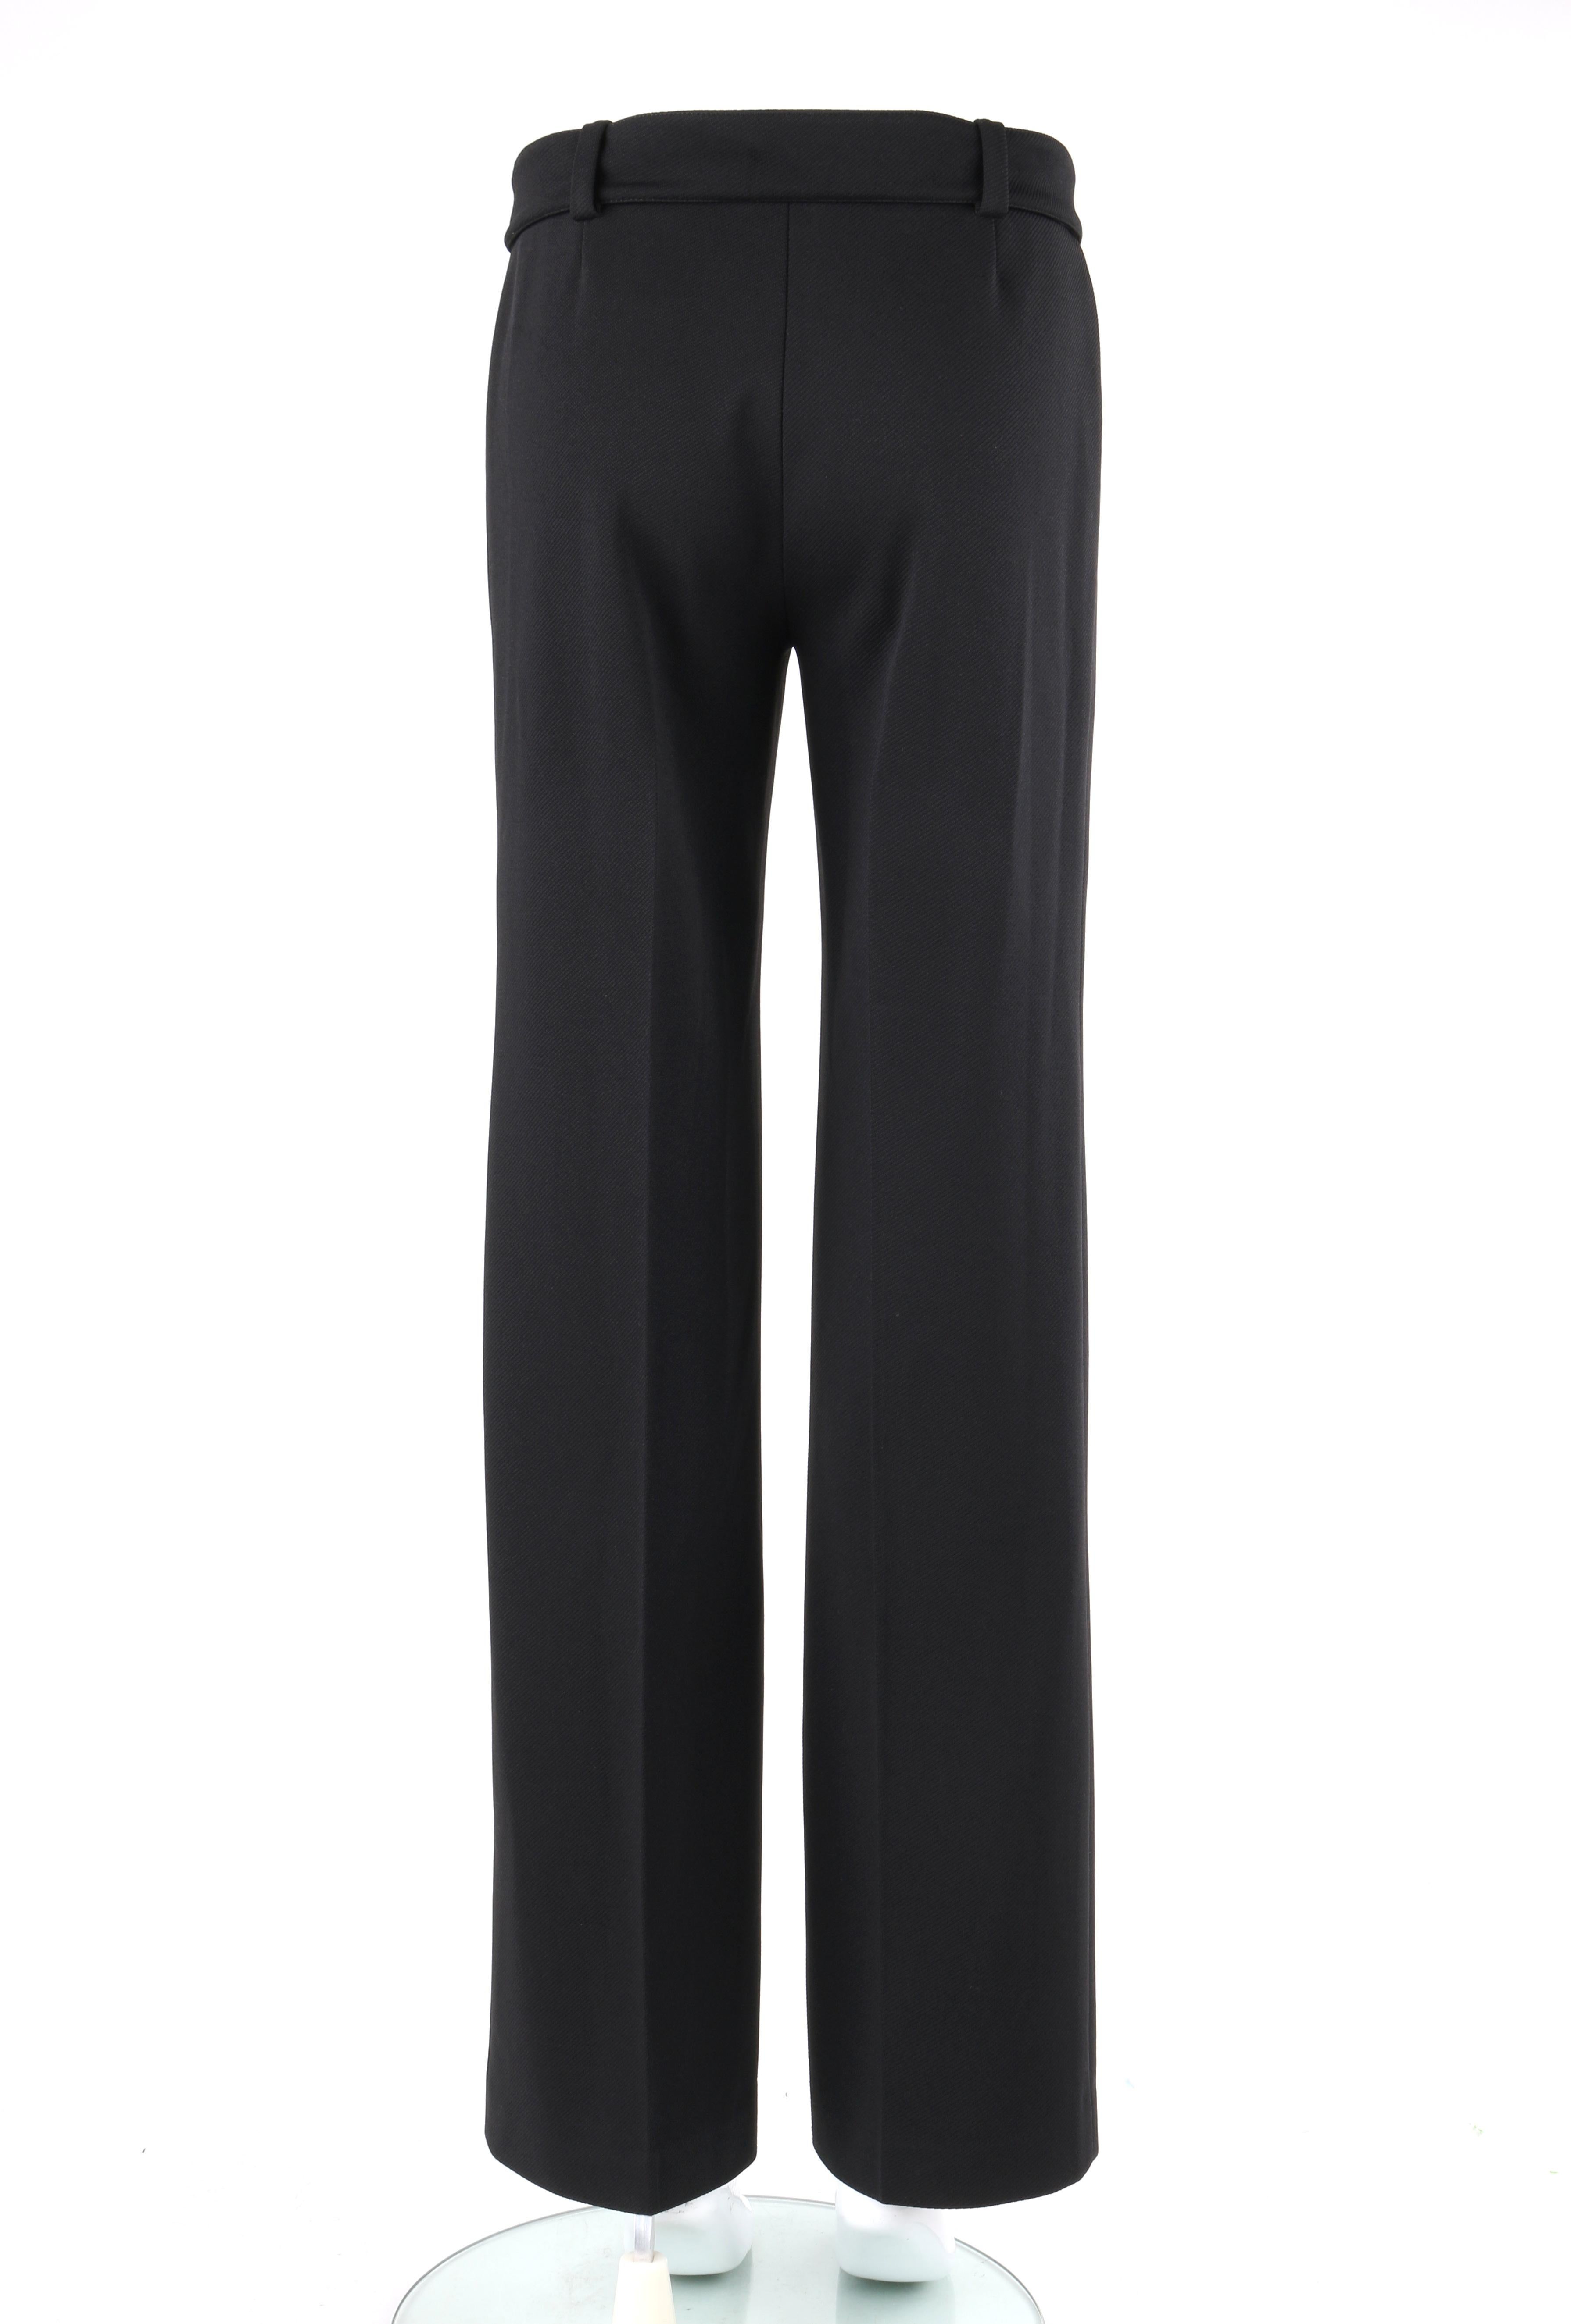 MIU MIU c.2000's PRADA Black Longline Twill Belted Long Jacket Pant Suit Set 3